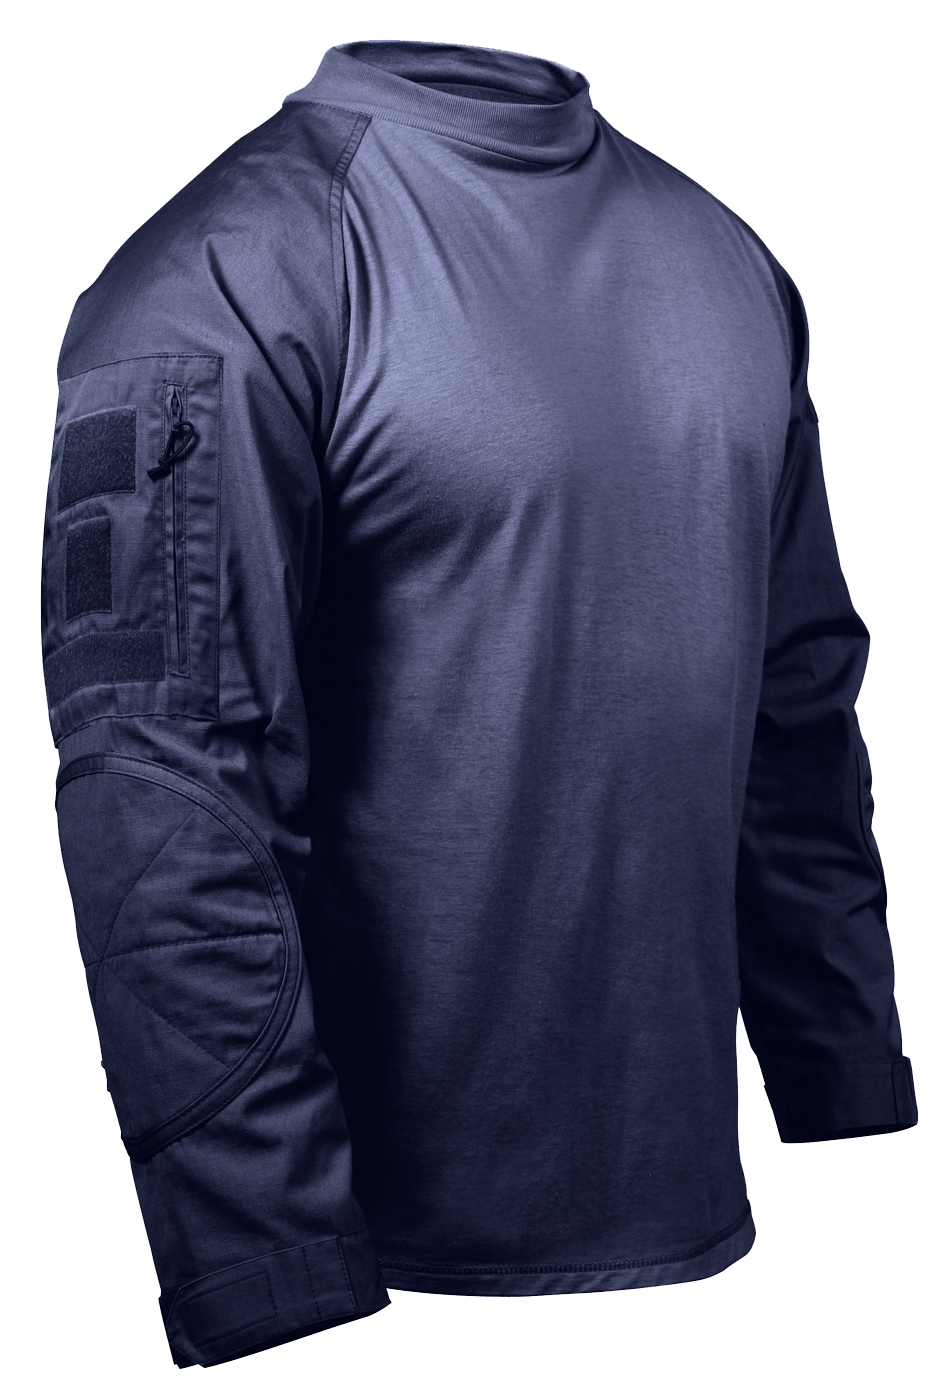 Rothco Navy Blue Combat Shirt (COMBATSHIRT)